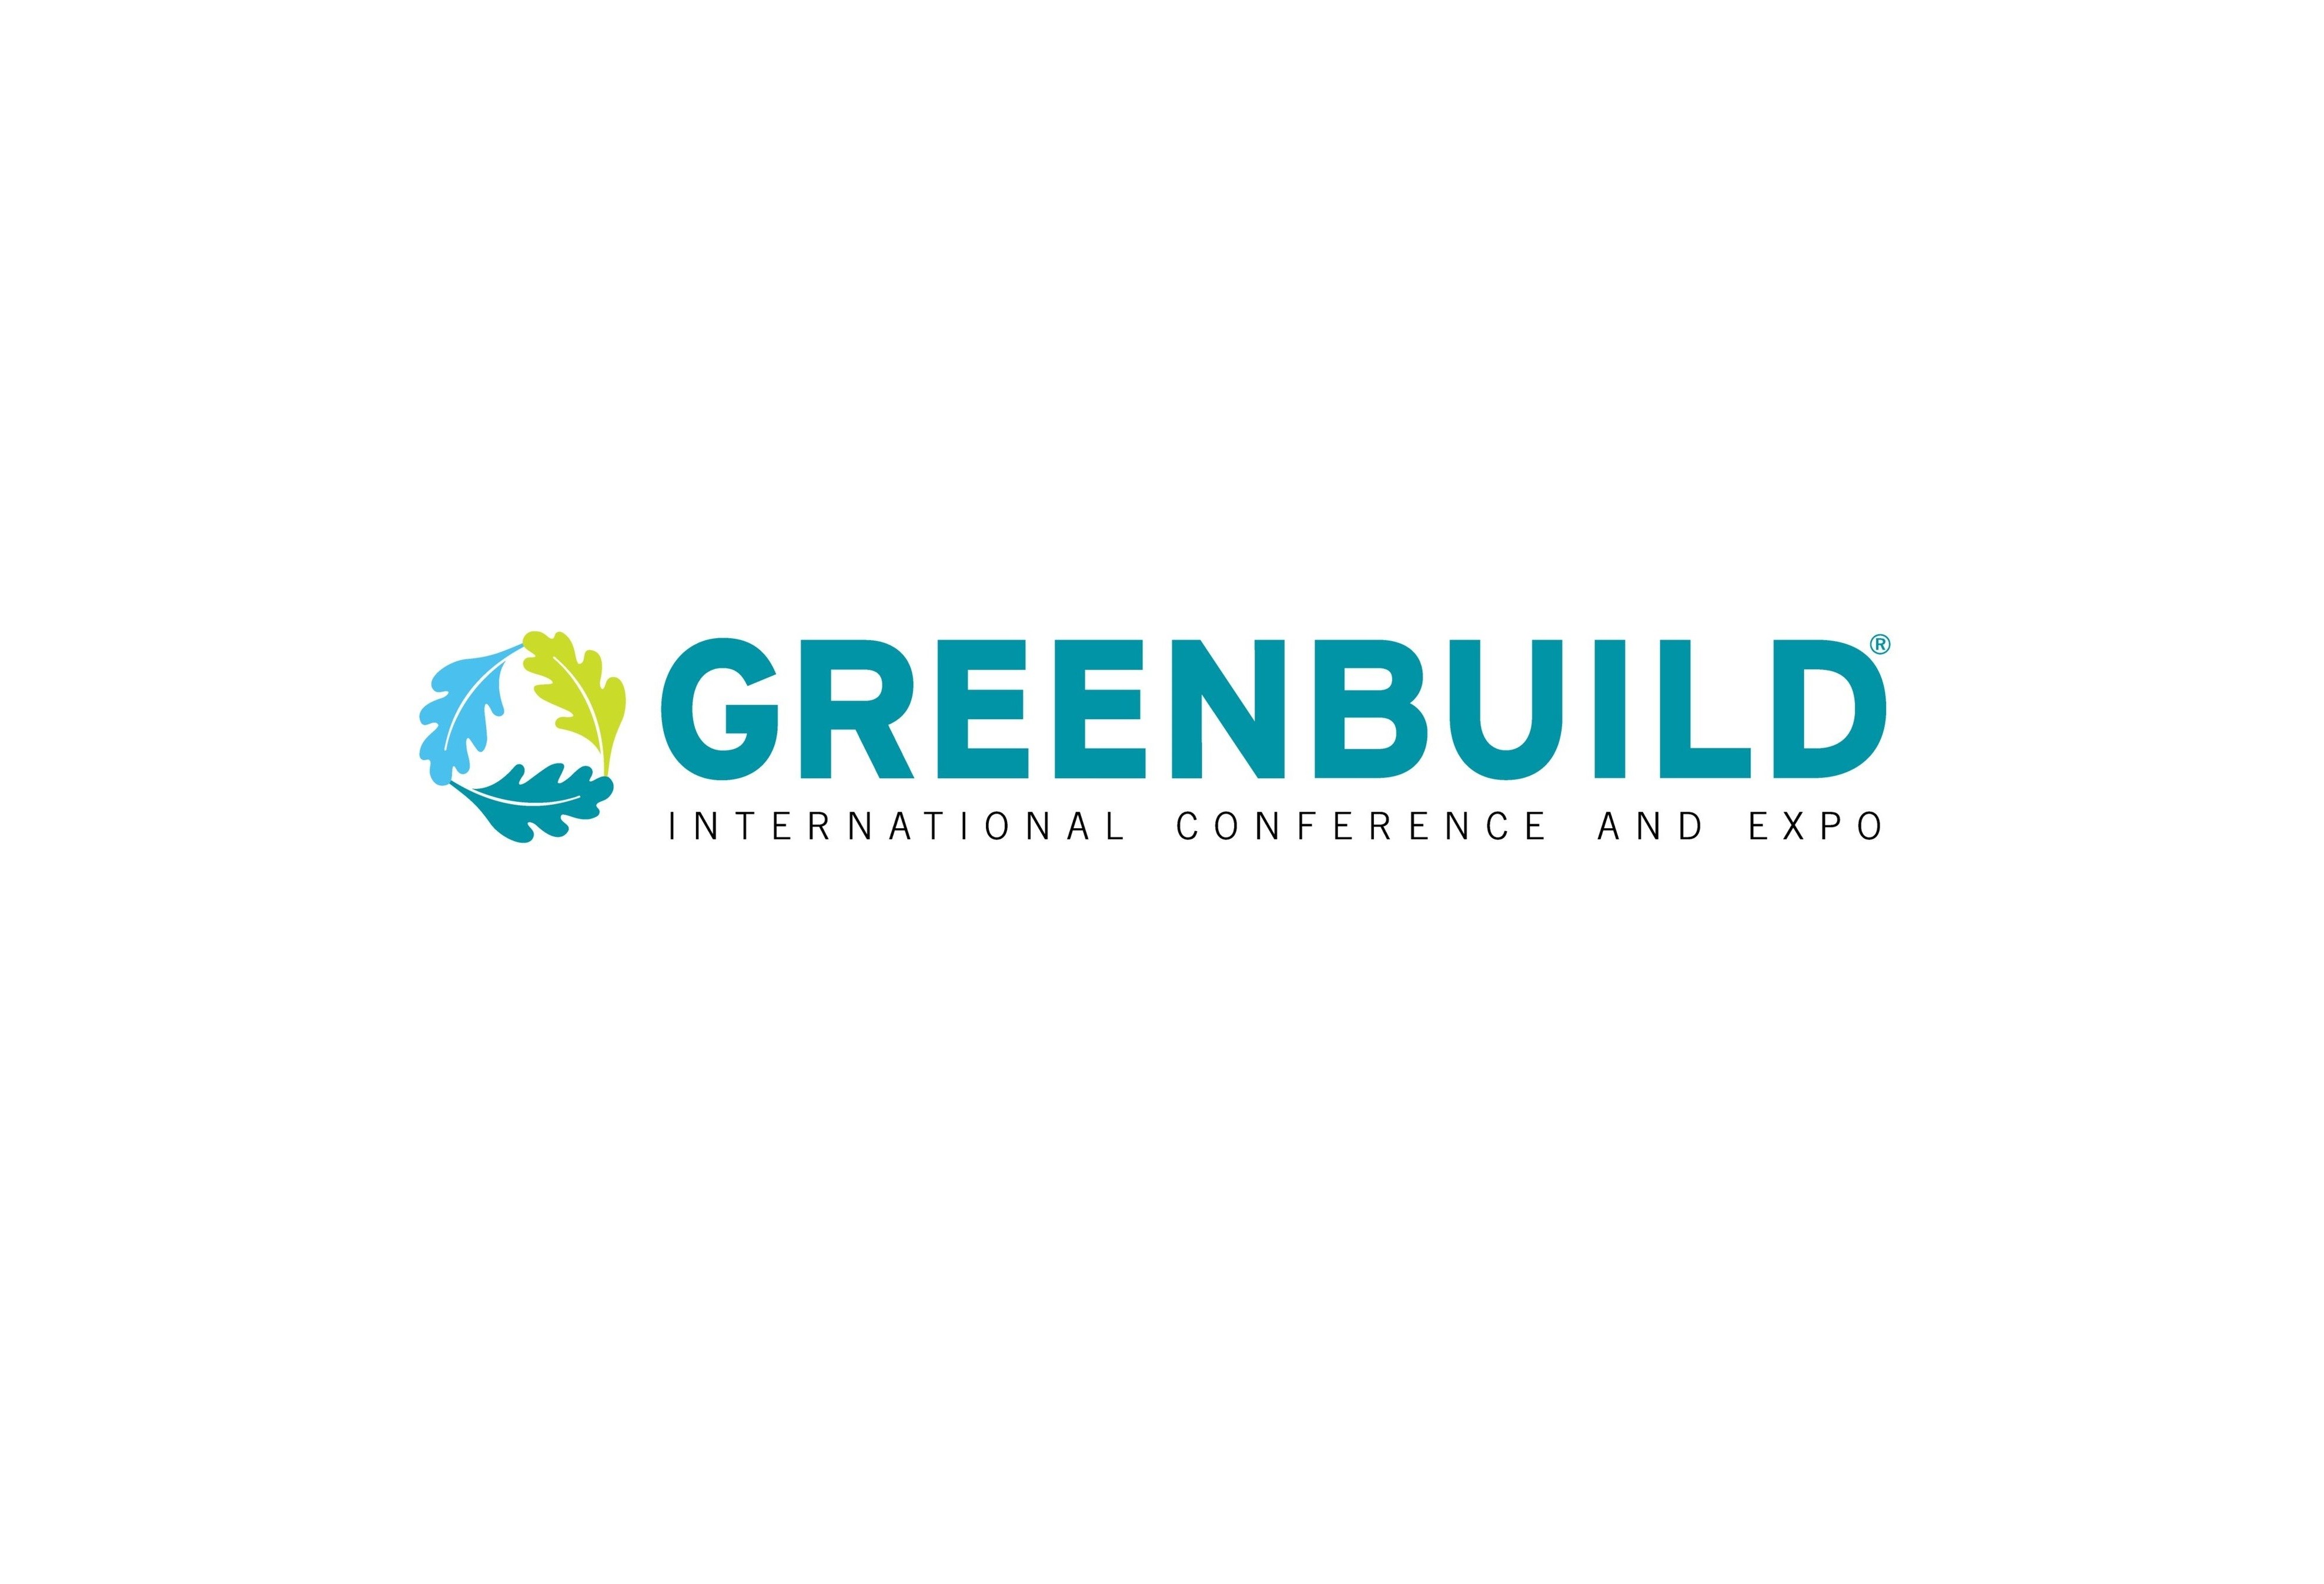 Conheça o Greenbuild International Conference and Expo